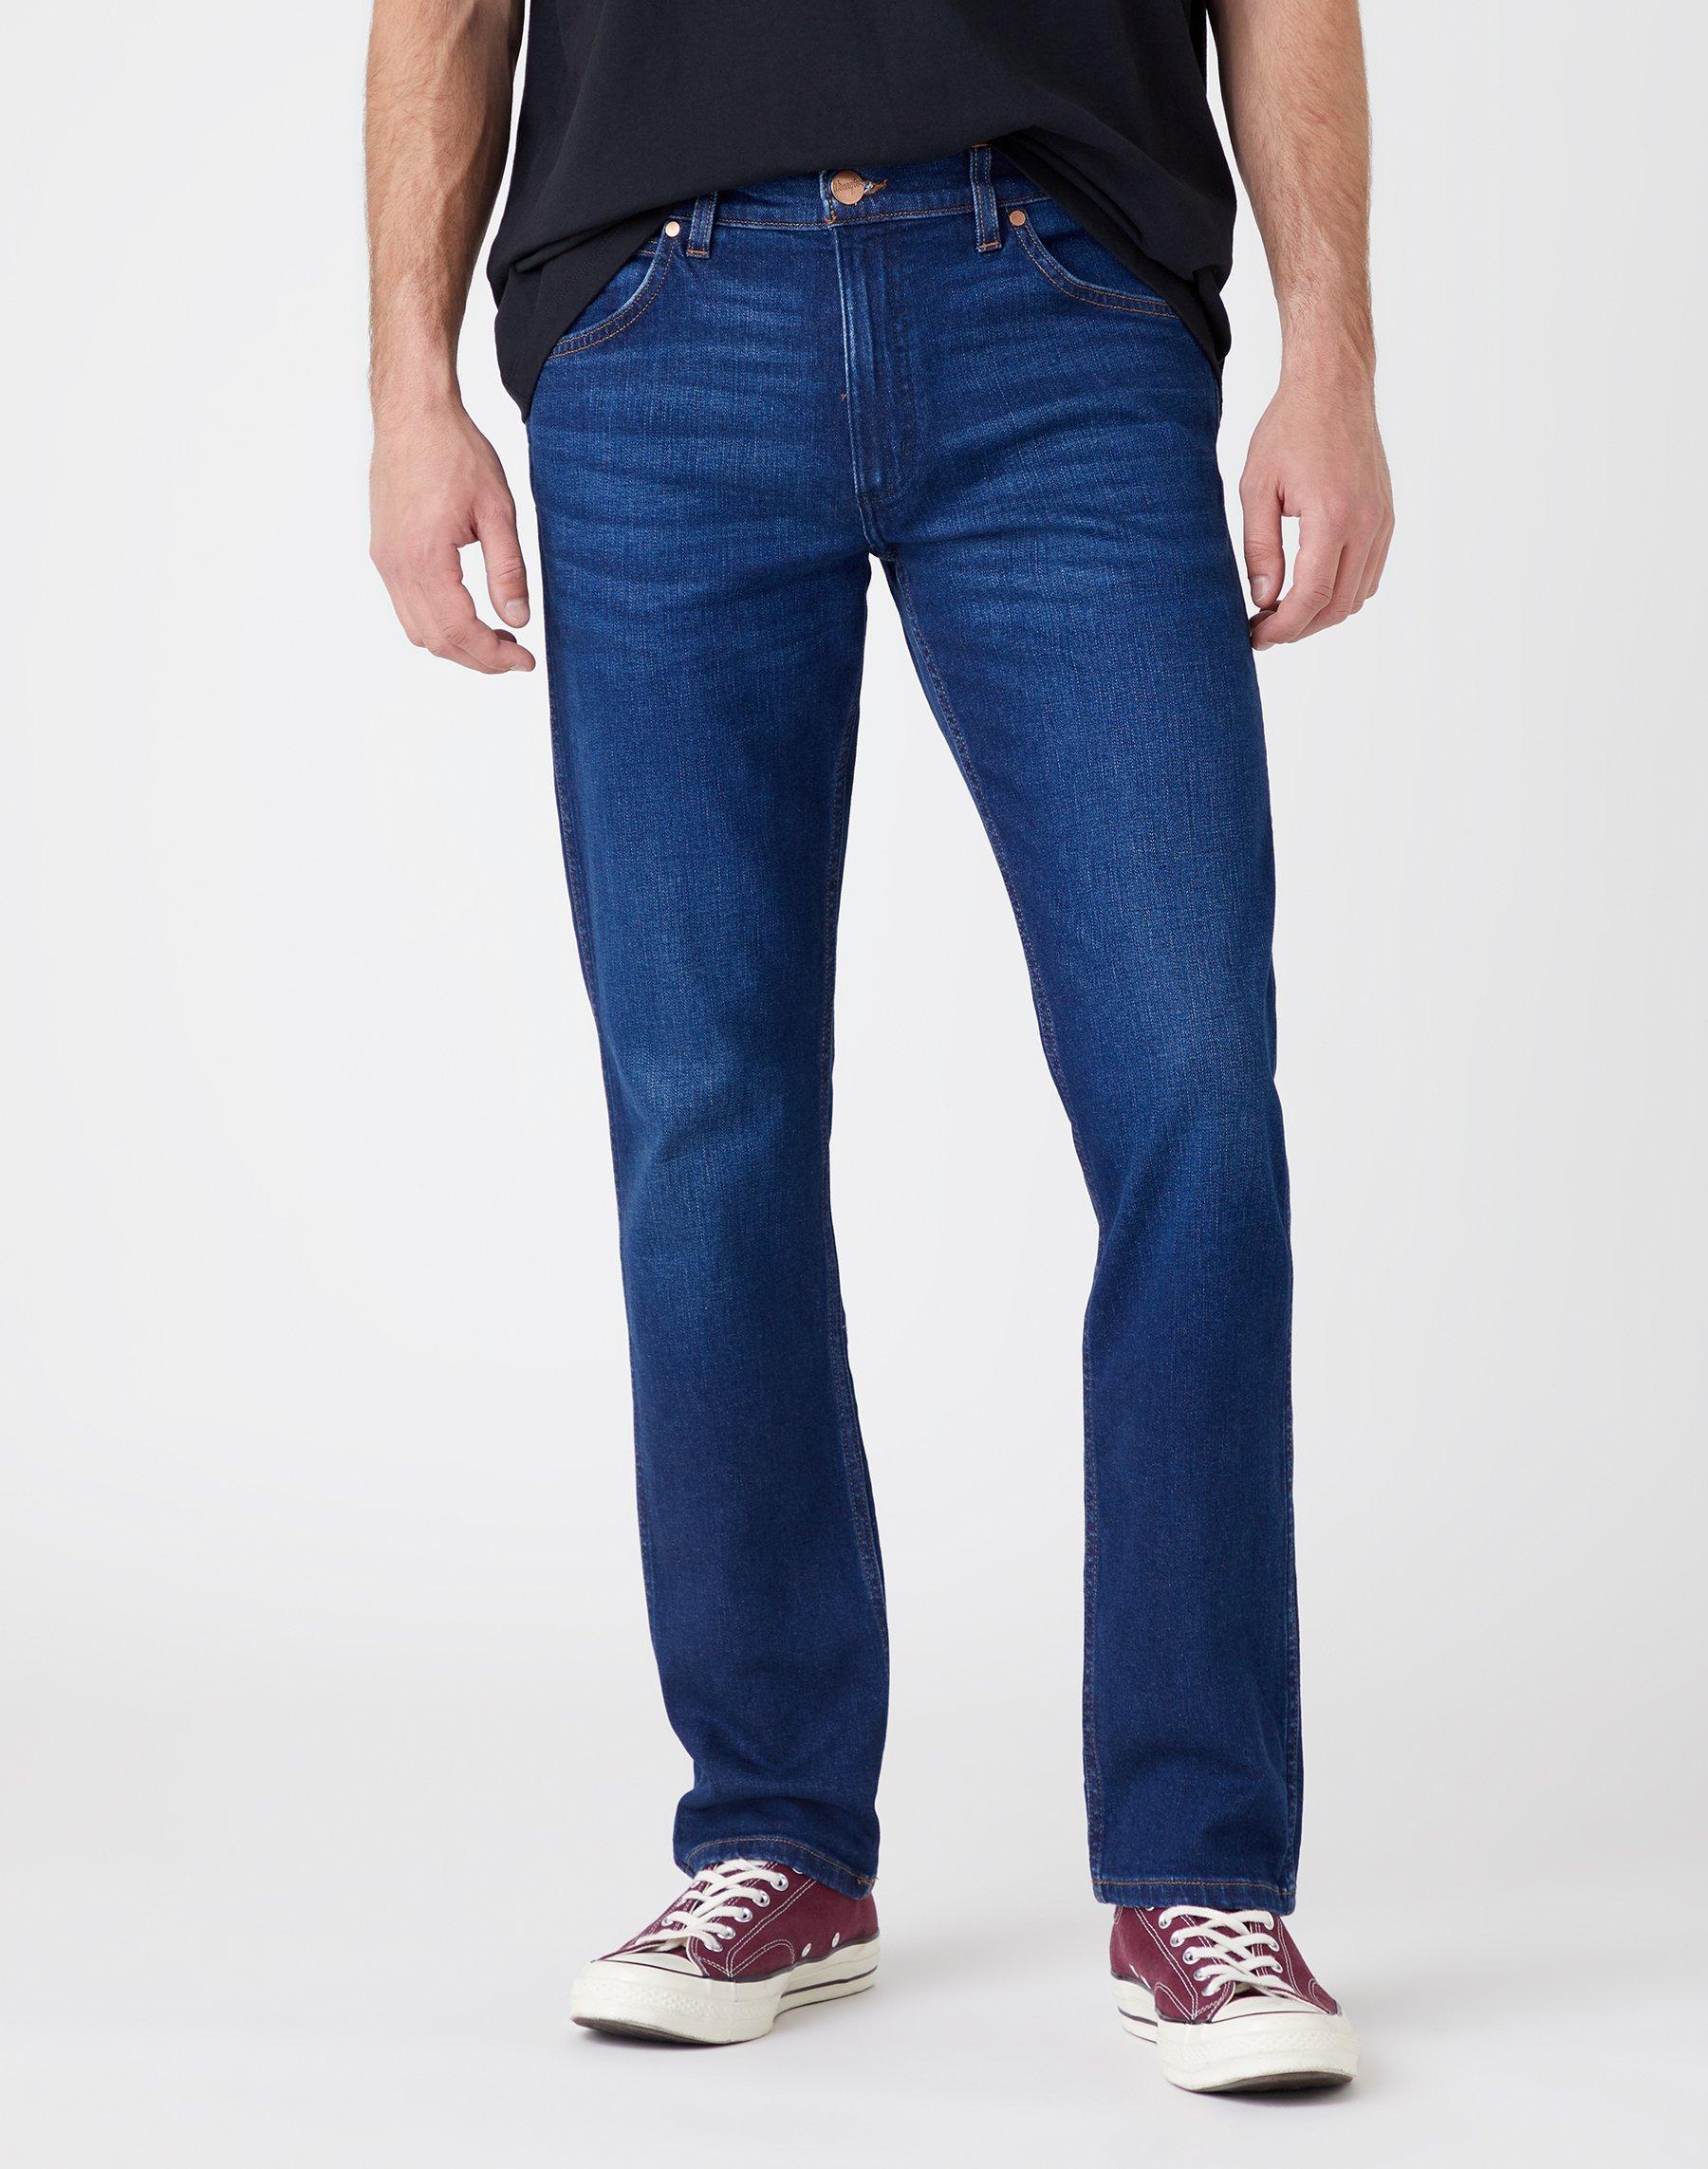 Greensboro Medium Stretch Jeans Herren Blau L34/ONE SIZE von Wrangler